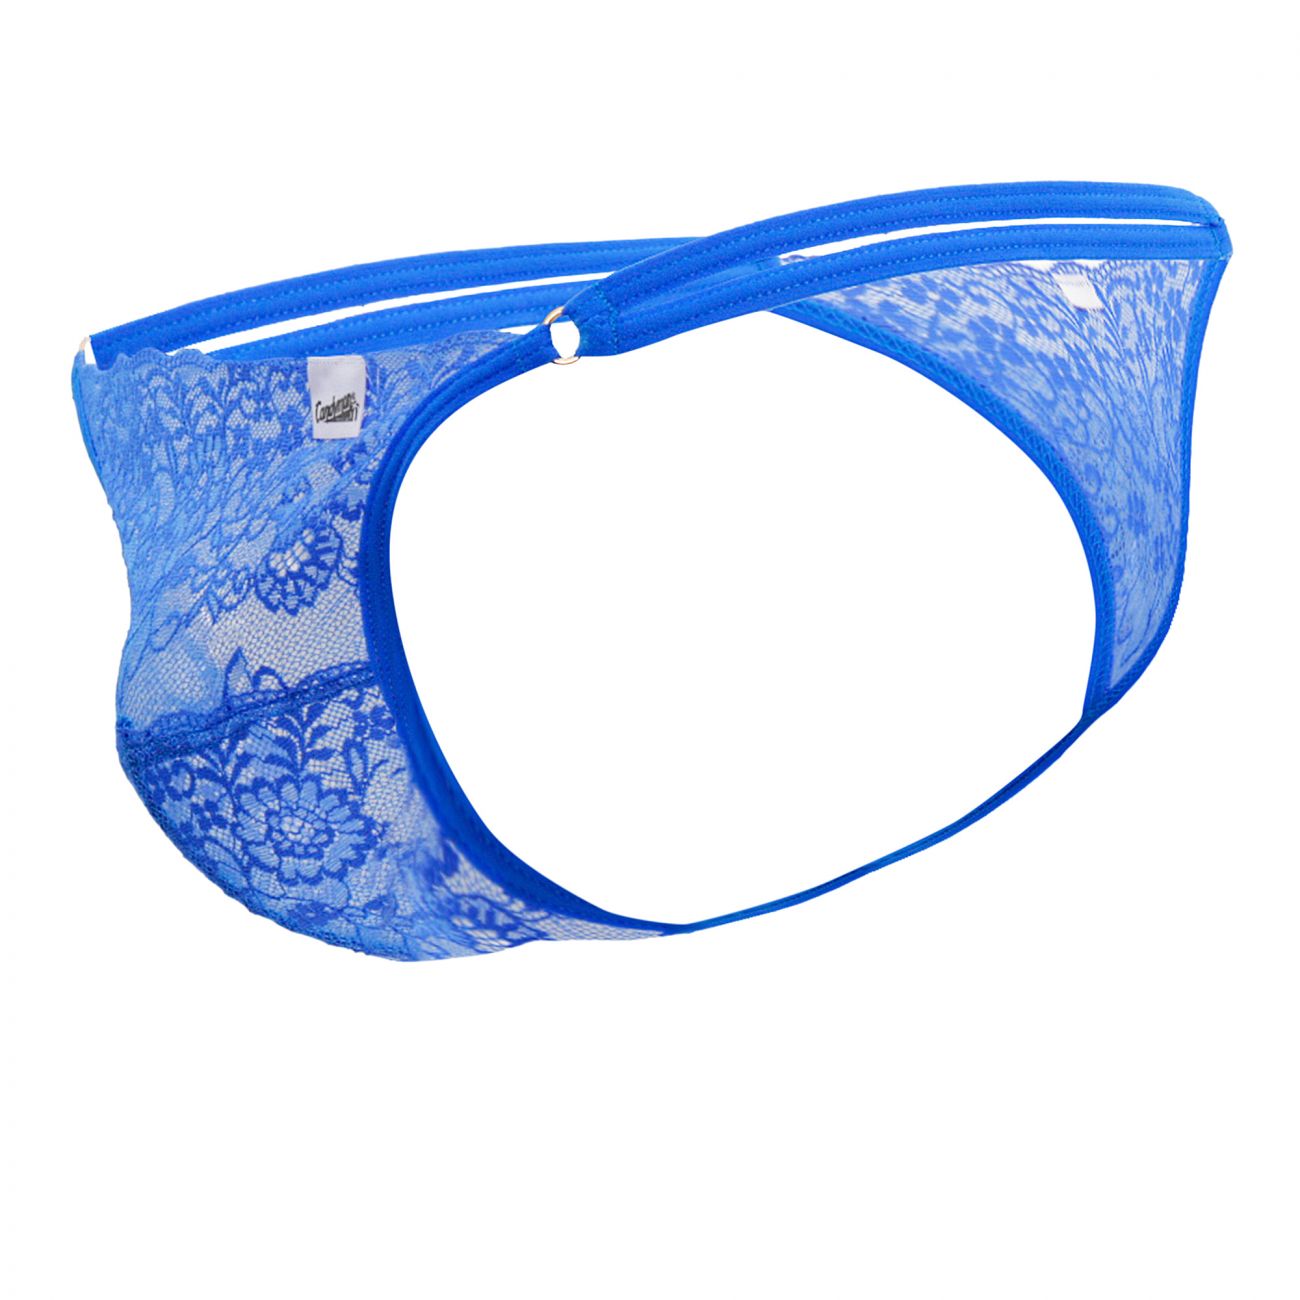 CandyMan 99421 Lace G-String Thongs Blue